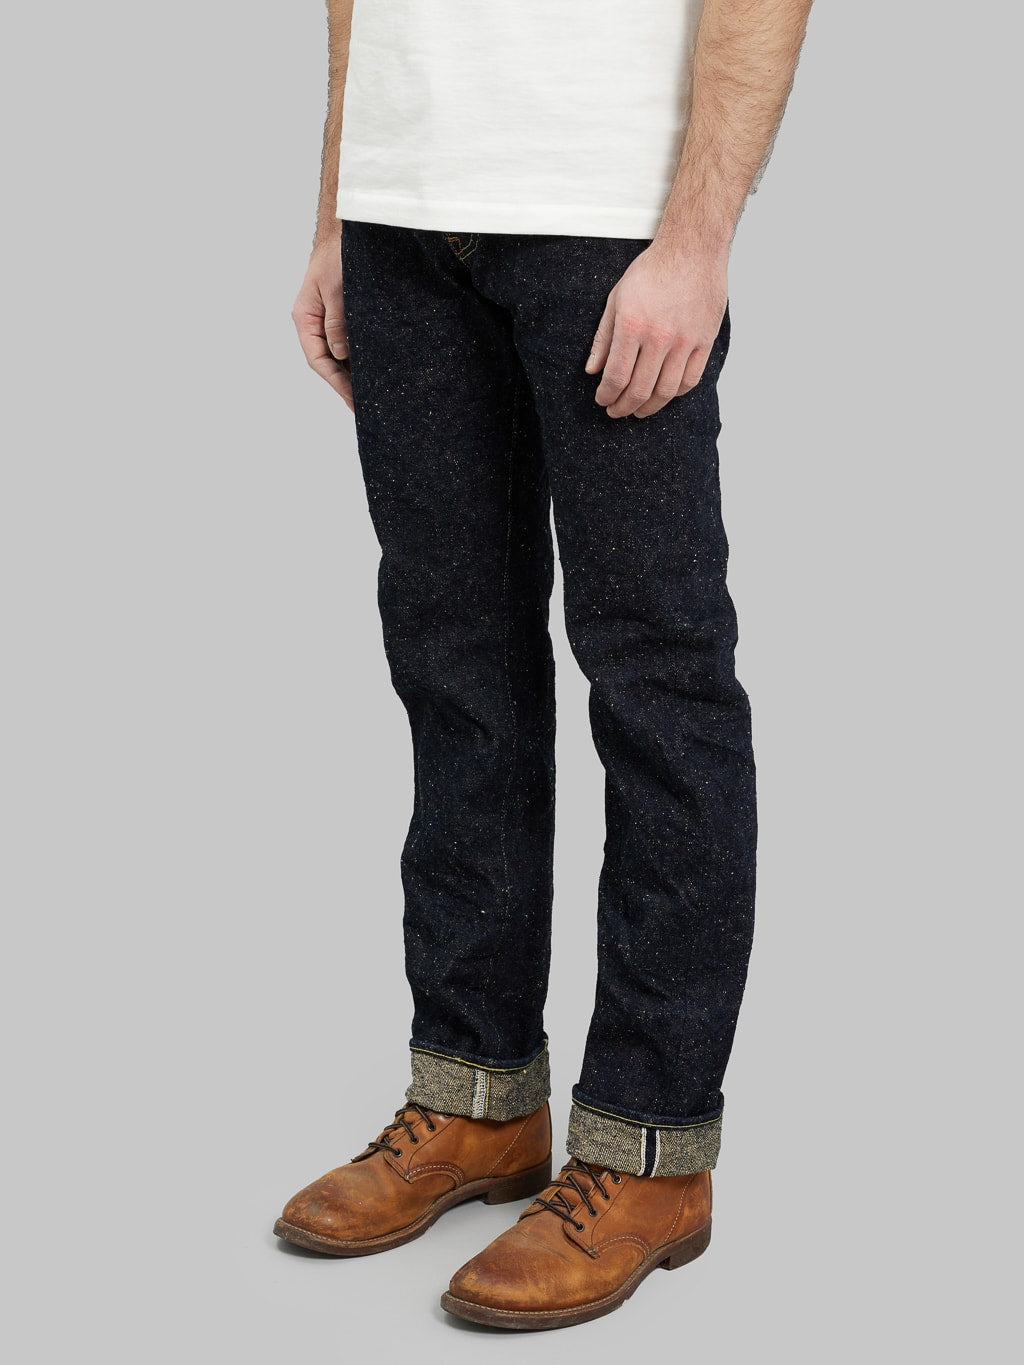 ONI Denim 288 Asphalt 20oz Regular Straight Jeans side fit